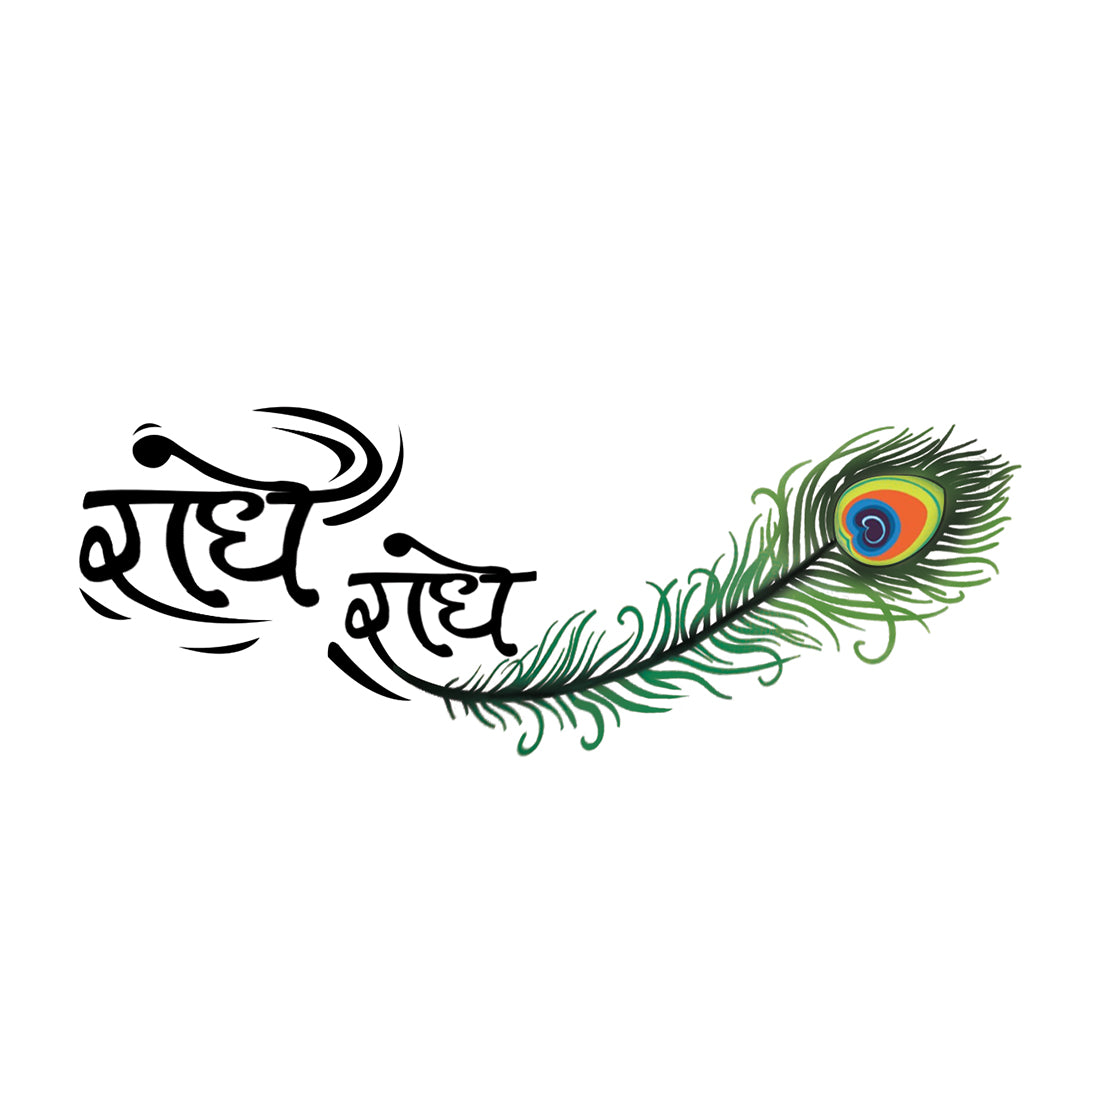 Shakti Graphic and Creation - Radhe Studio Logo Design | Facebook